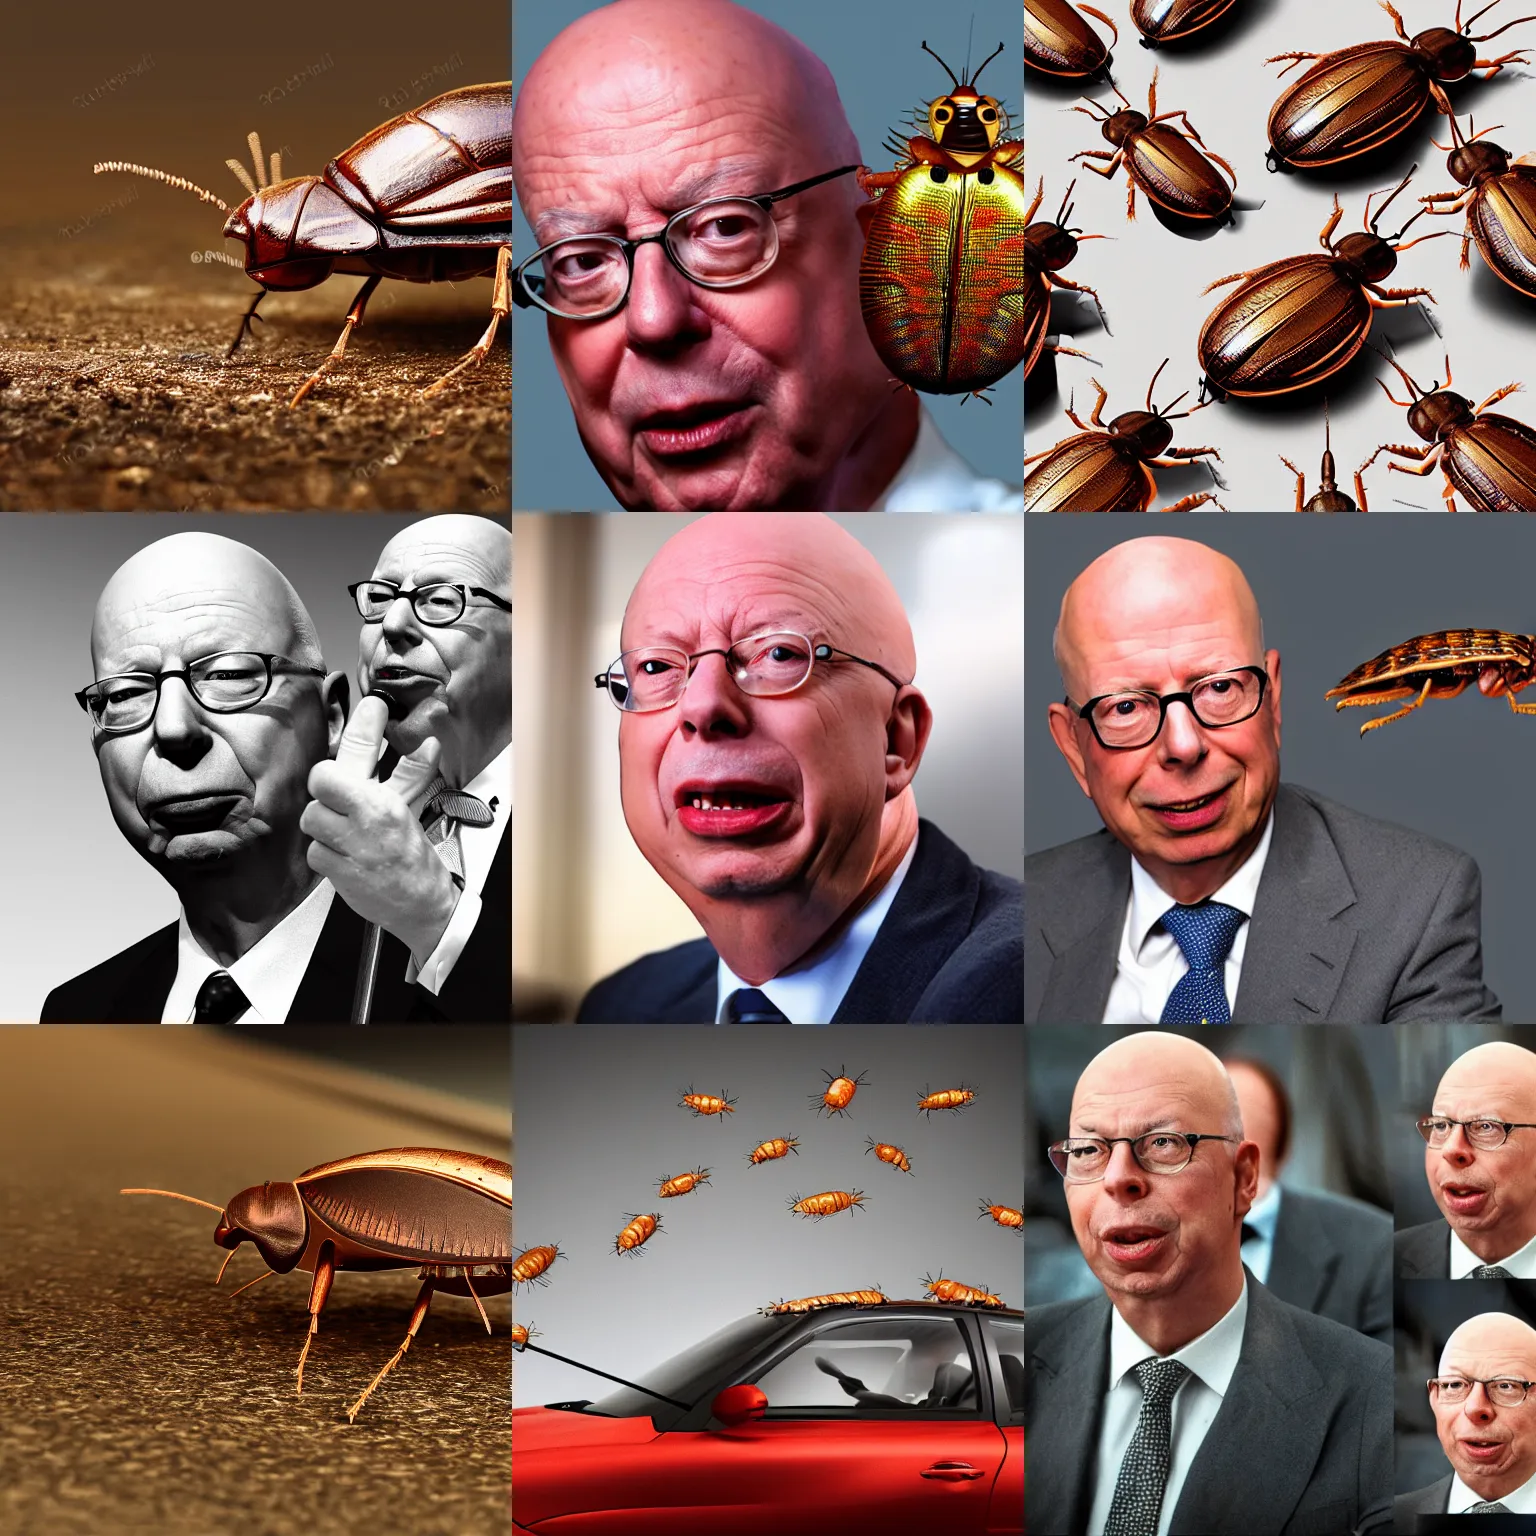 Prompt: cockroaches eating klaus schwab, photorealistic, 4 k